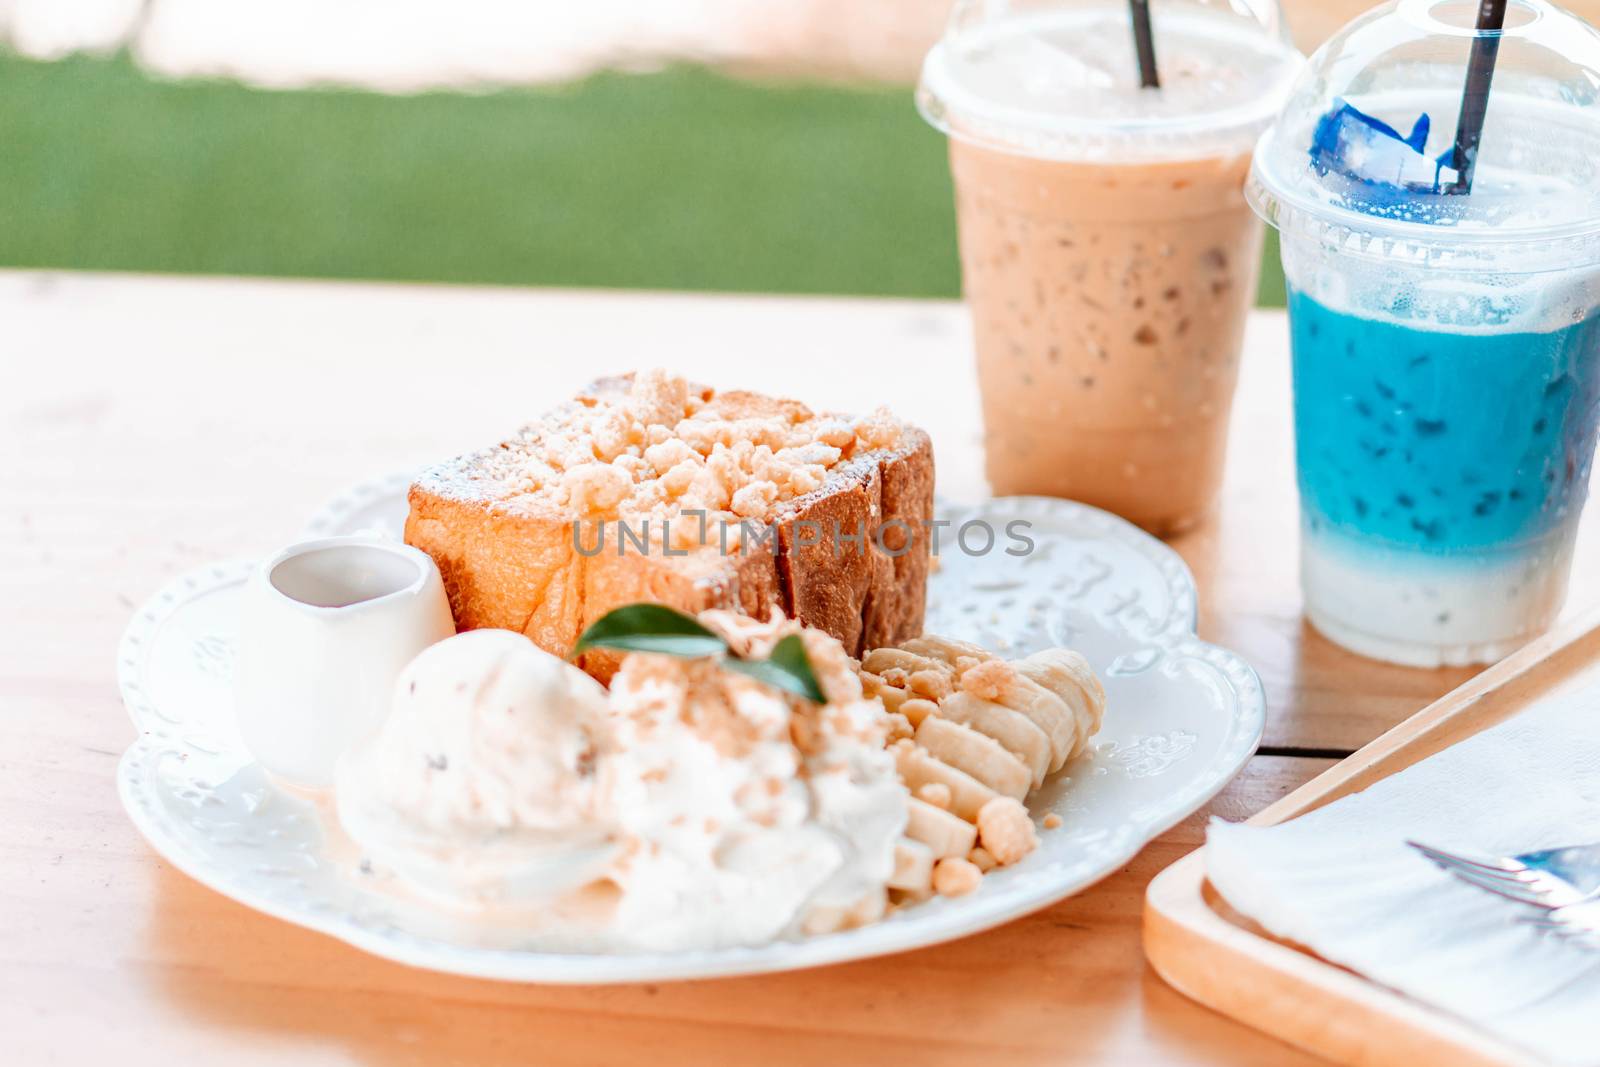 Honey toast dessert with ice coffee on wood table. by pt.pongsak@gmail.com